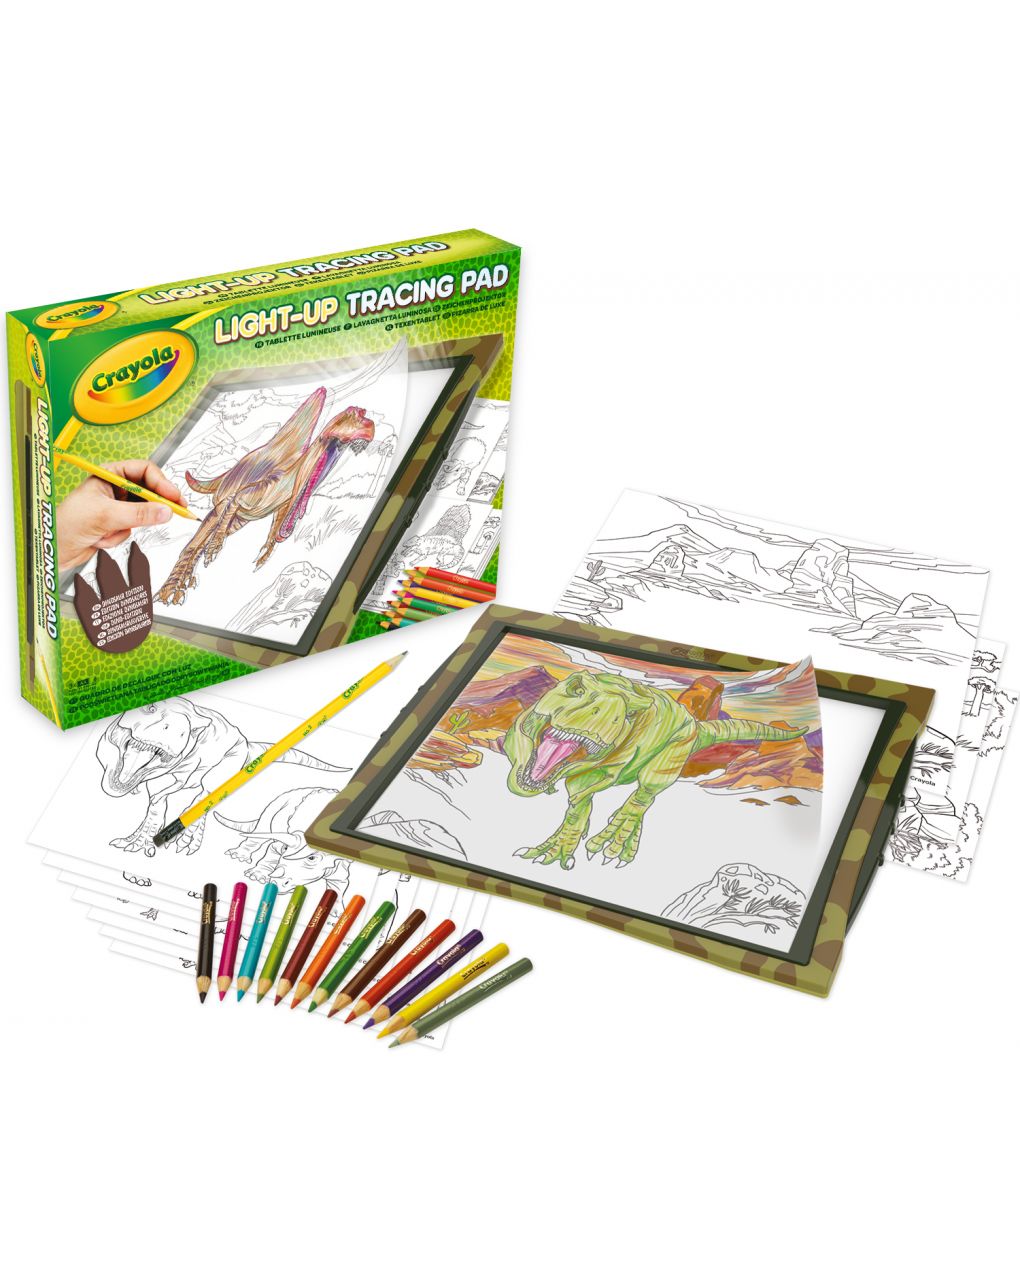 Pizarra luminosa dinosaurio 74-7497 - crayola - Crayola